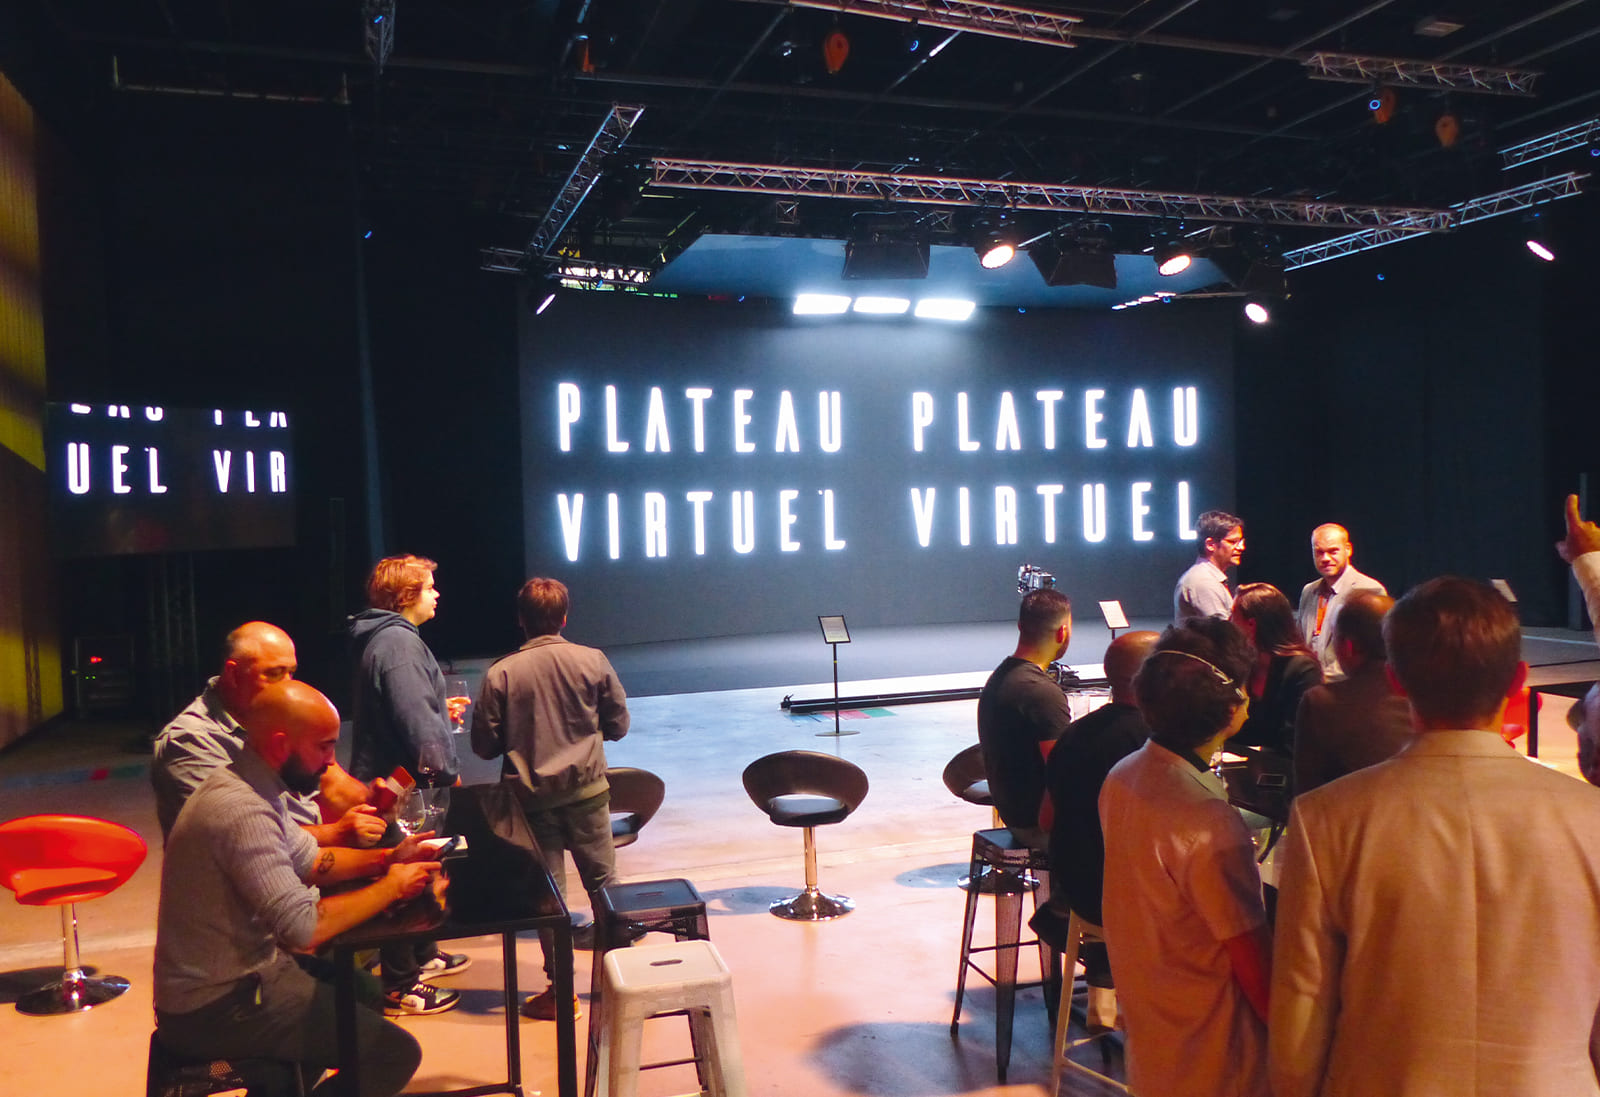 Plateau virtuel